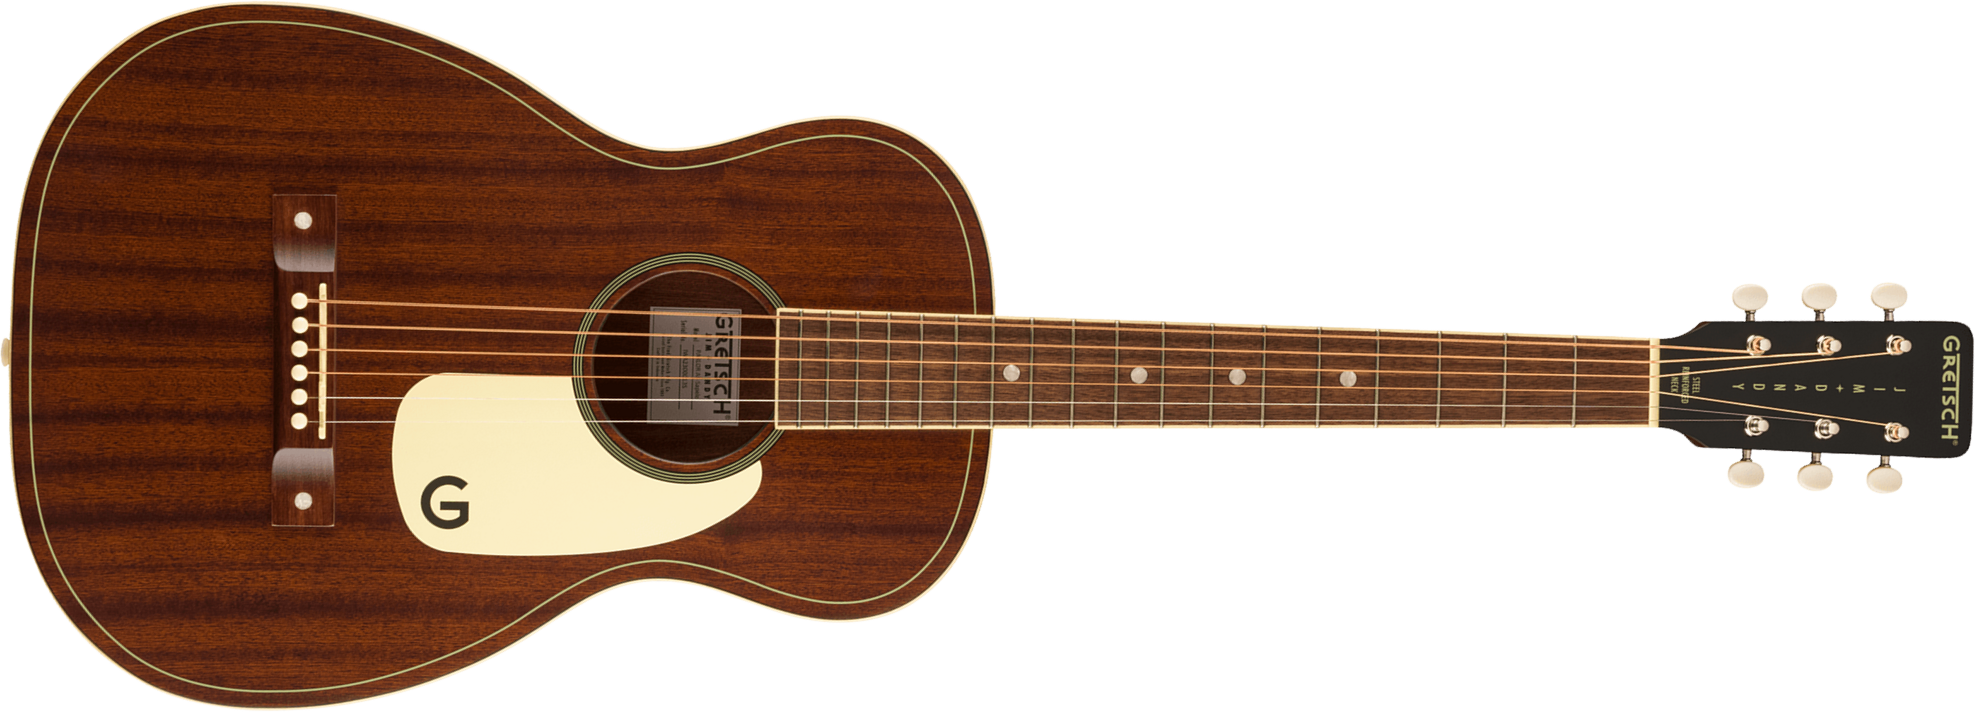 Gretsch Jim Dandy Parlor Tout Tilleul Noy - Frontier Stain Semi Gloss - Travel acoustic guitar - Main picture